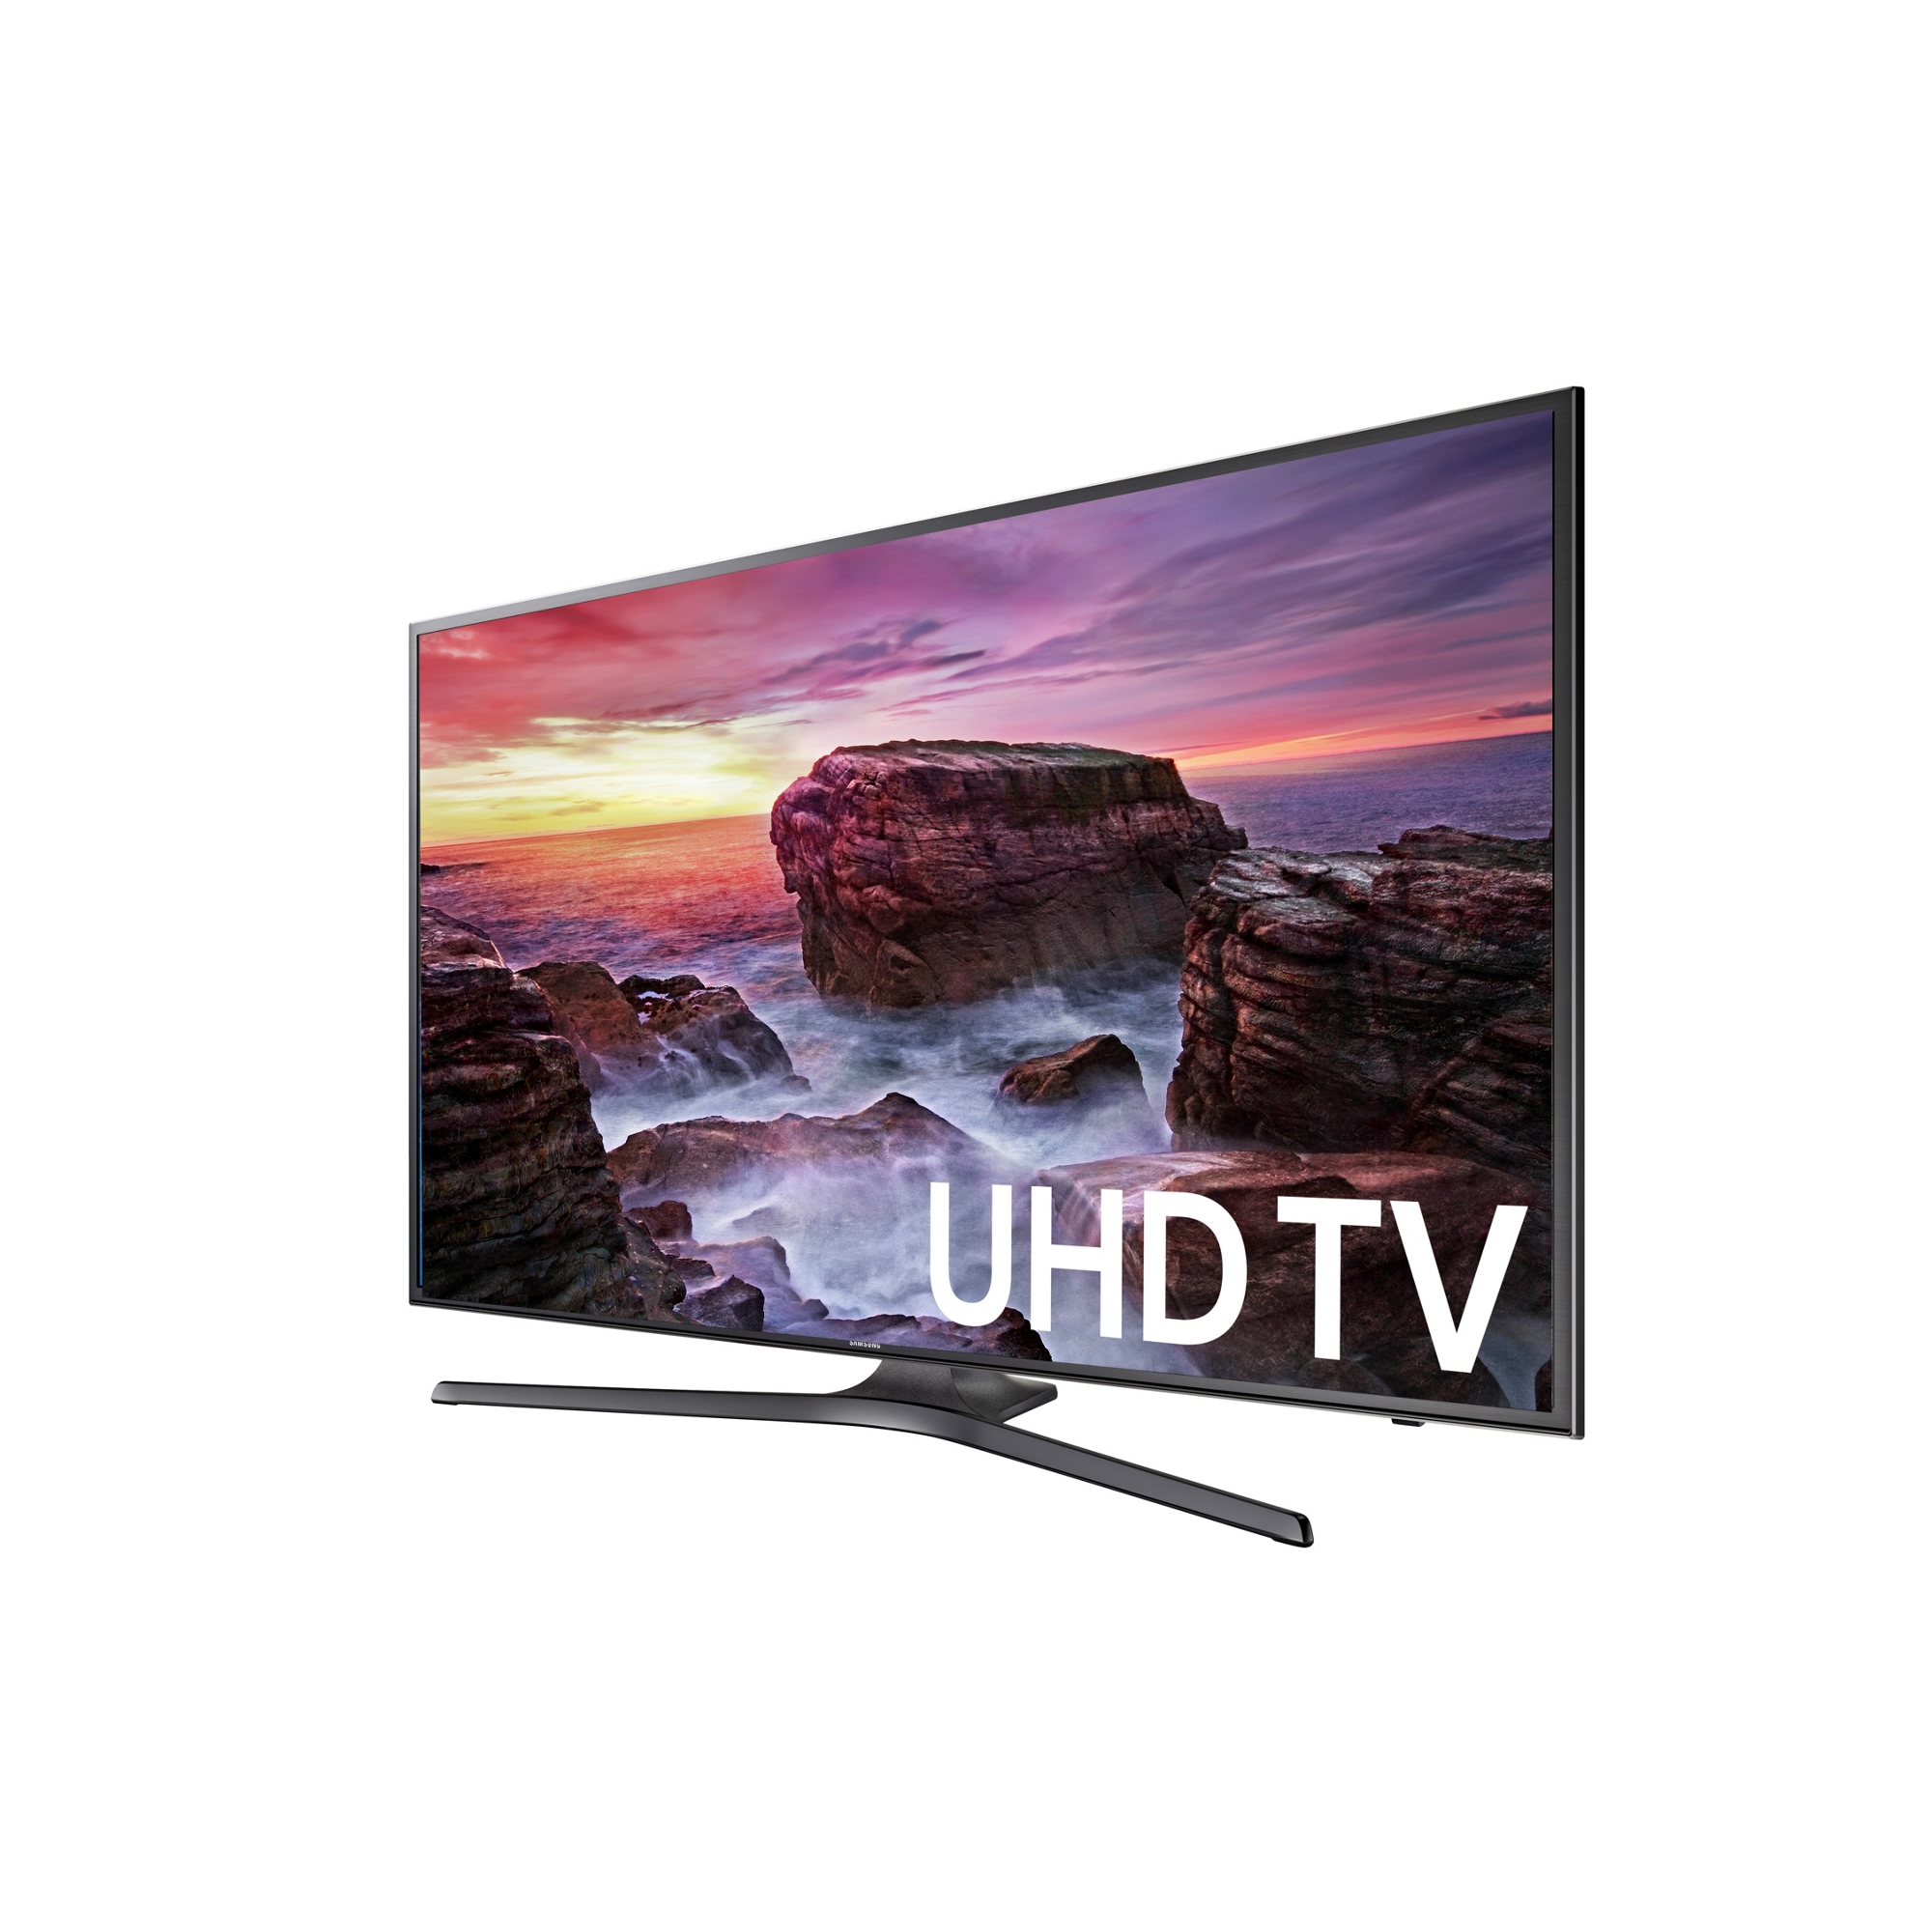 The Samsung Television Range, Smart TVs